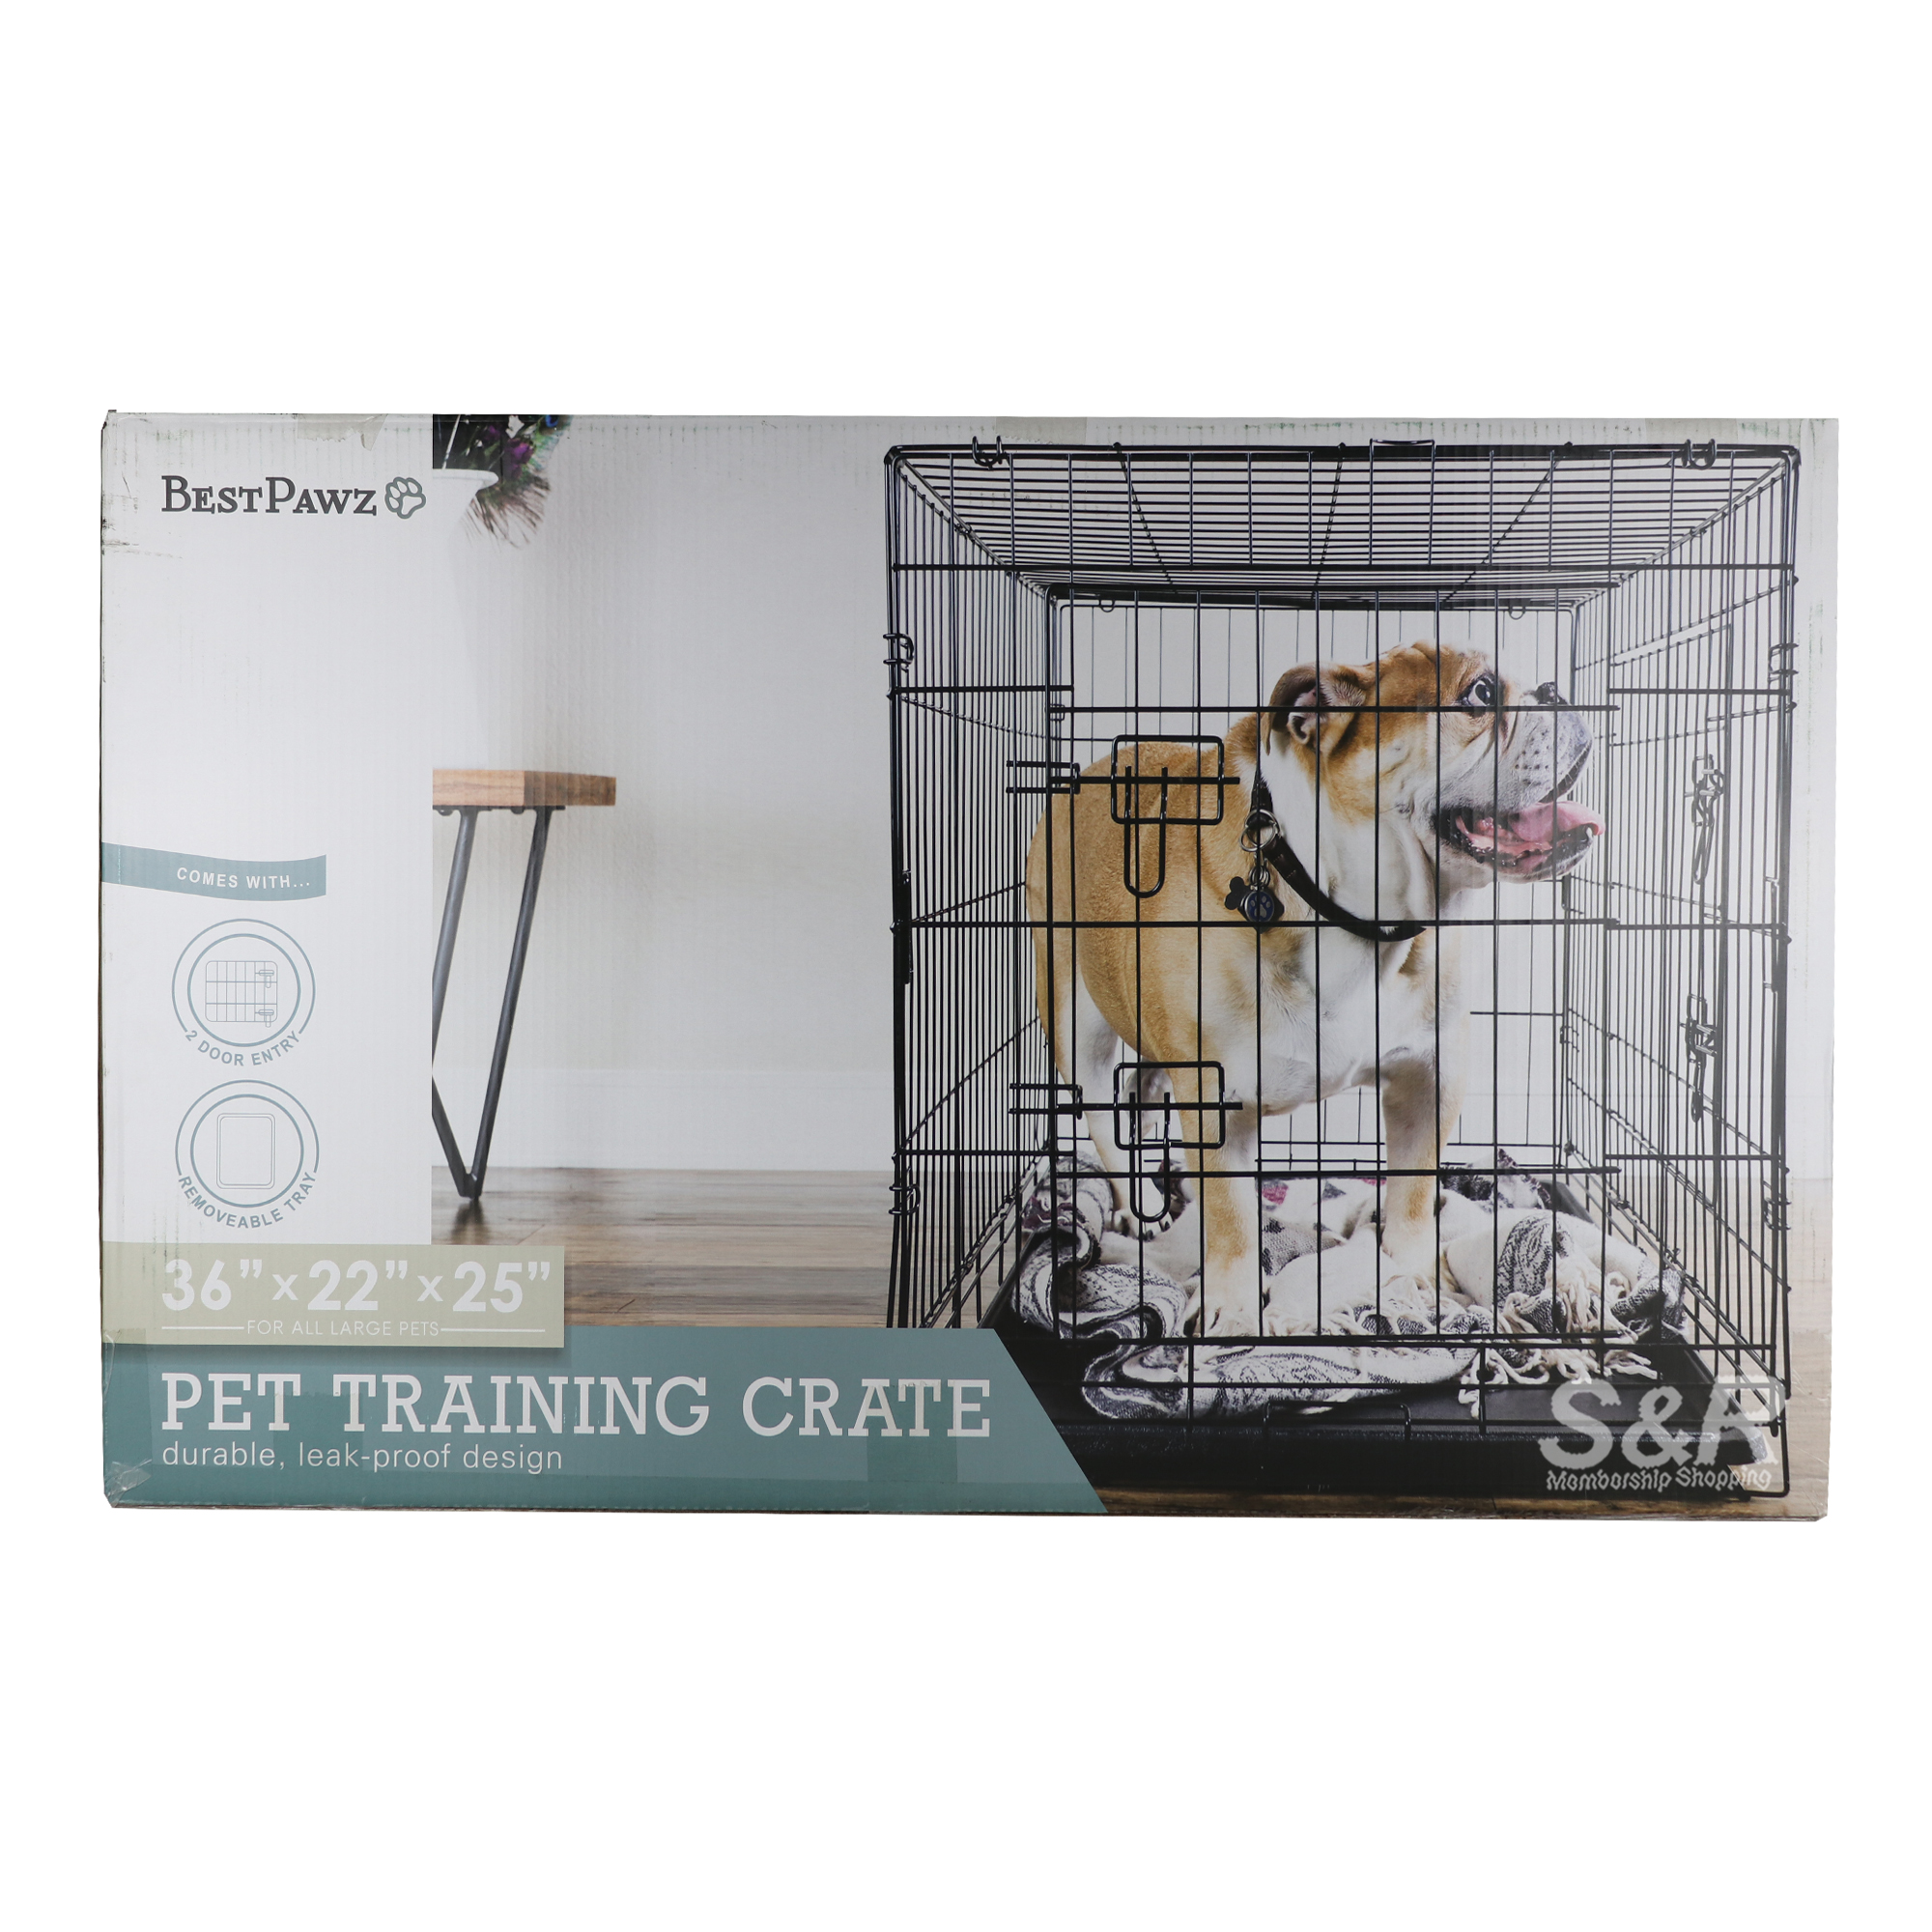 Best Pawz Pet Training Crate 36x22x25in